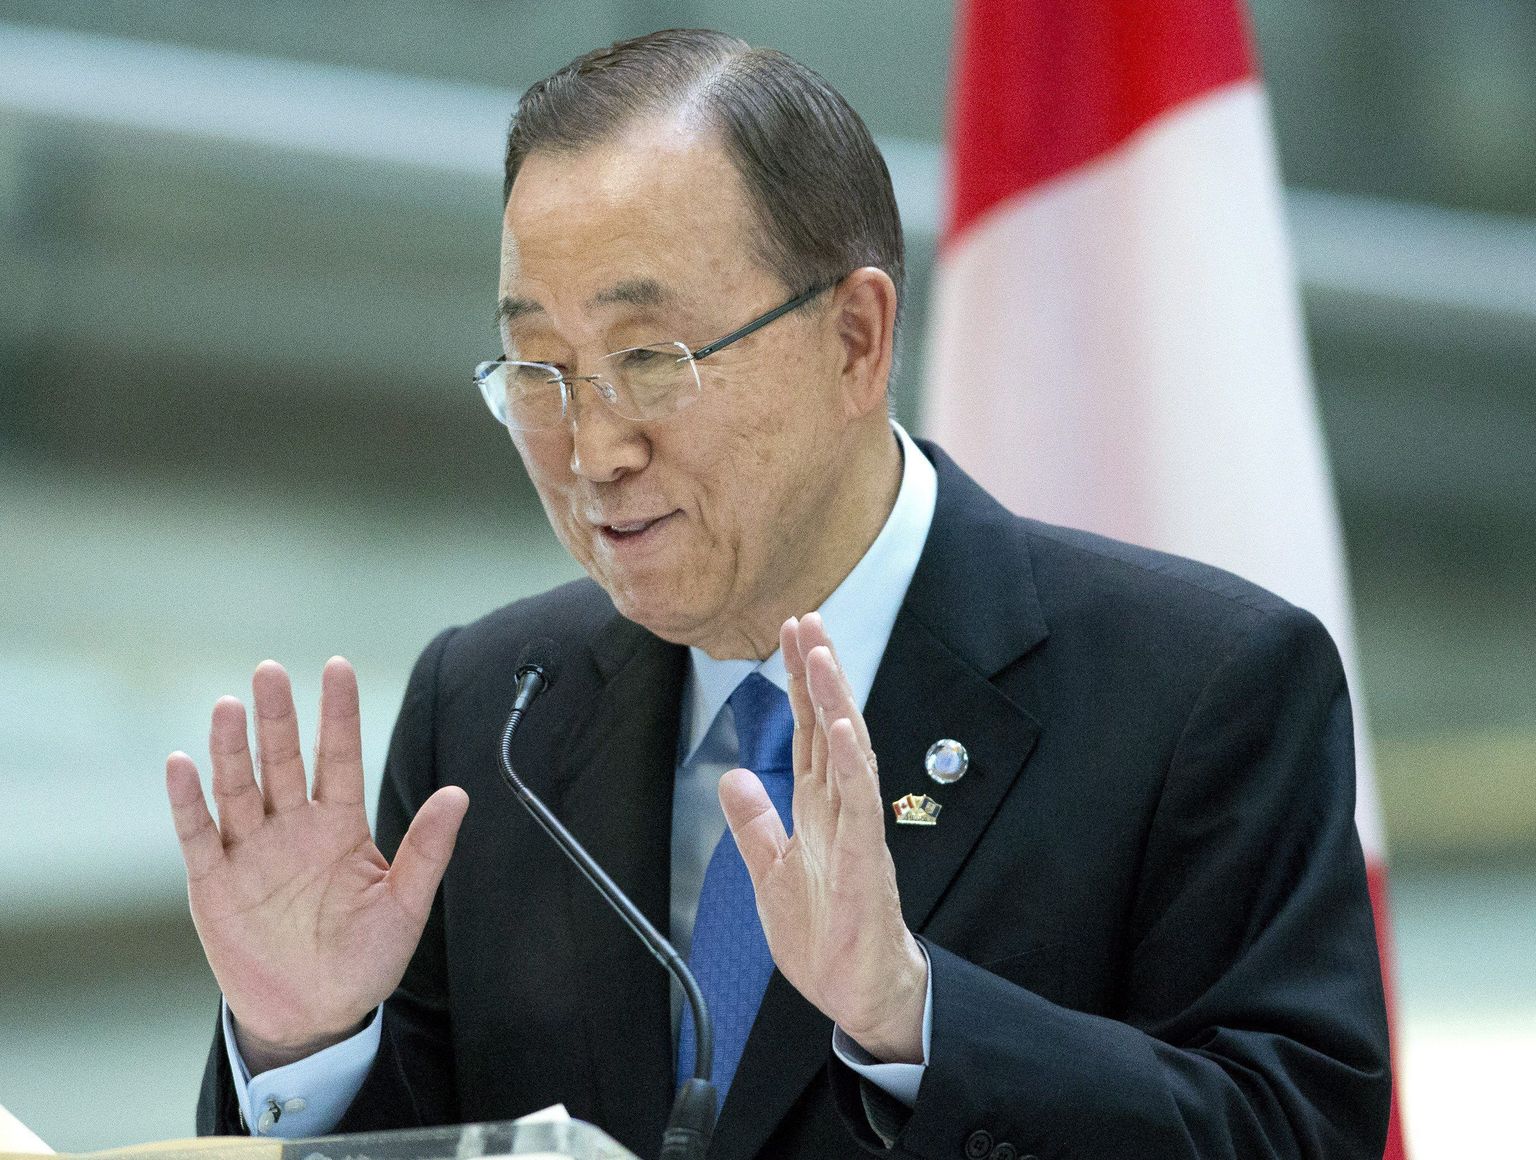 ÜRO peasekretär Ban Ki-moon